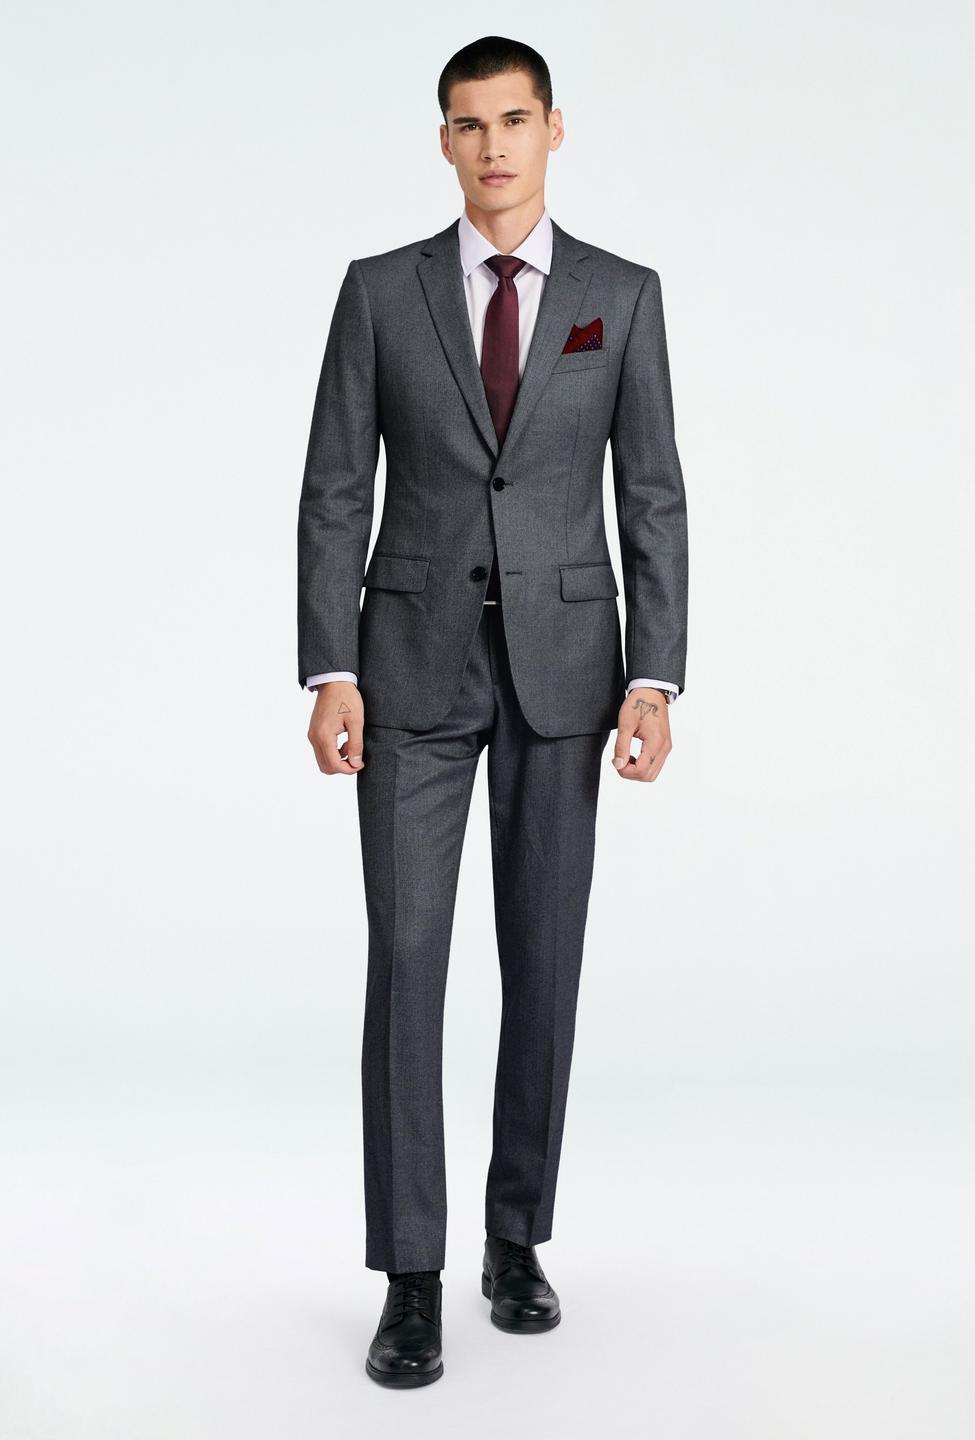 Gray suit - Prescot Herringbone Design from Seasonal Indochino Collection